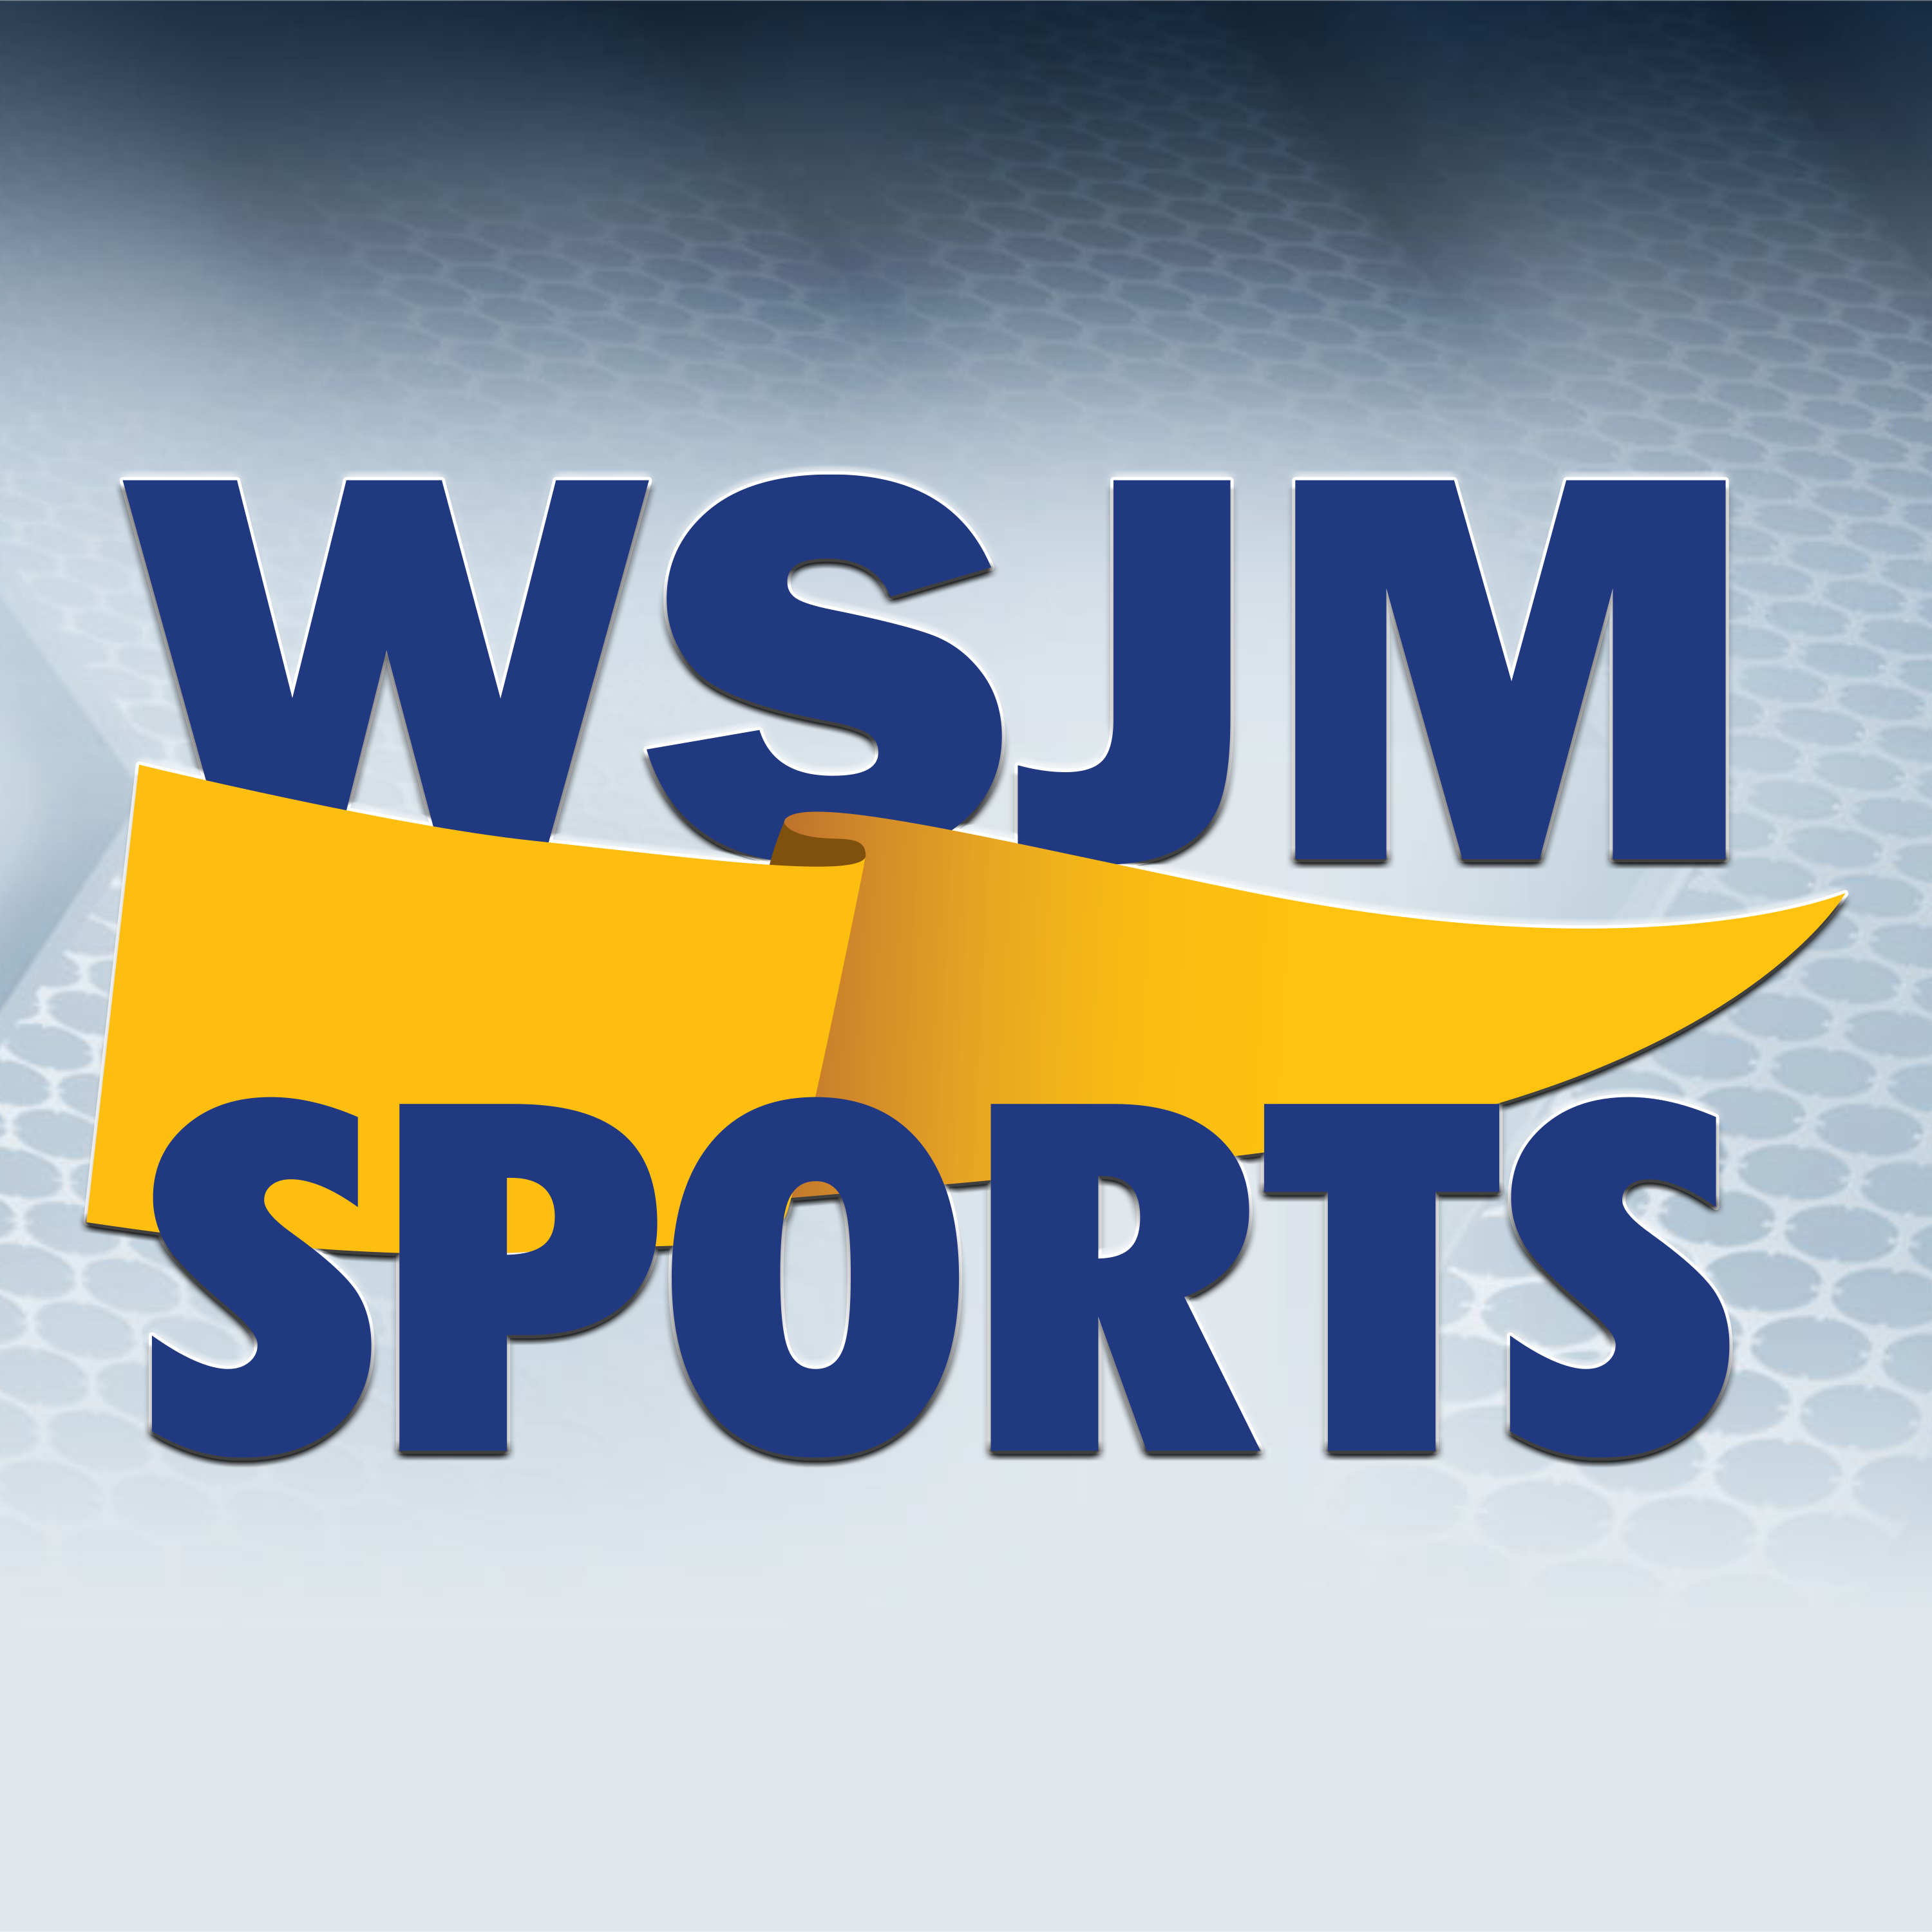 Late triple gives CMU 63-61 upset win at Michigan – Friday Morning Sports Update